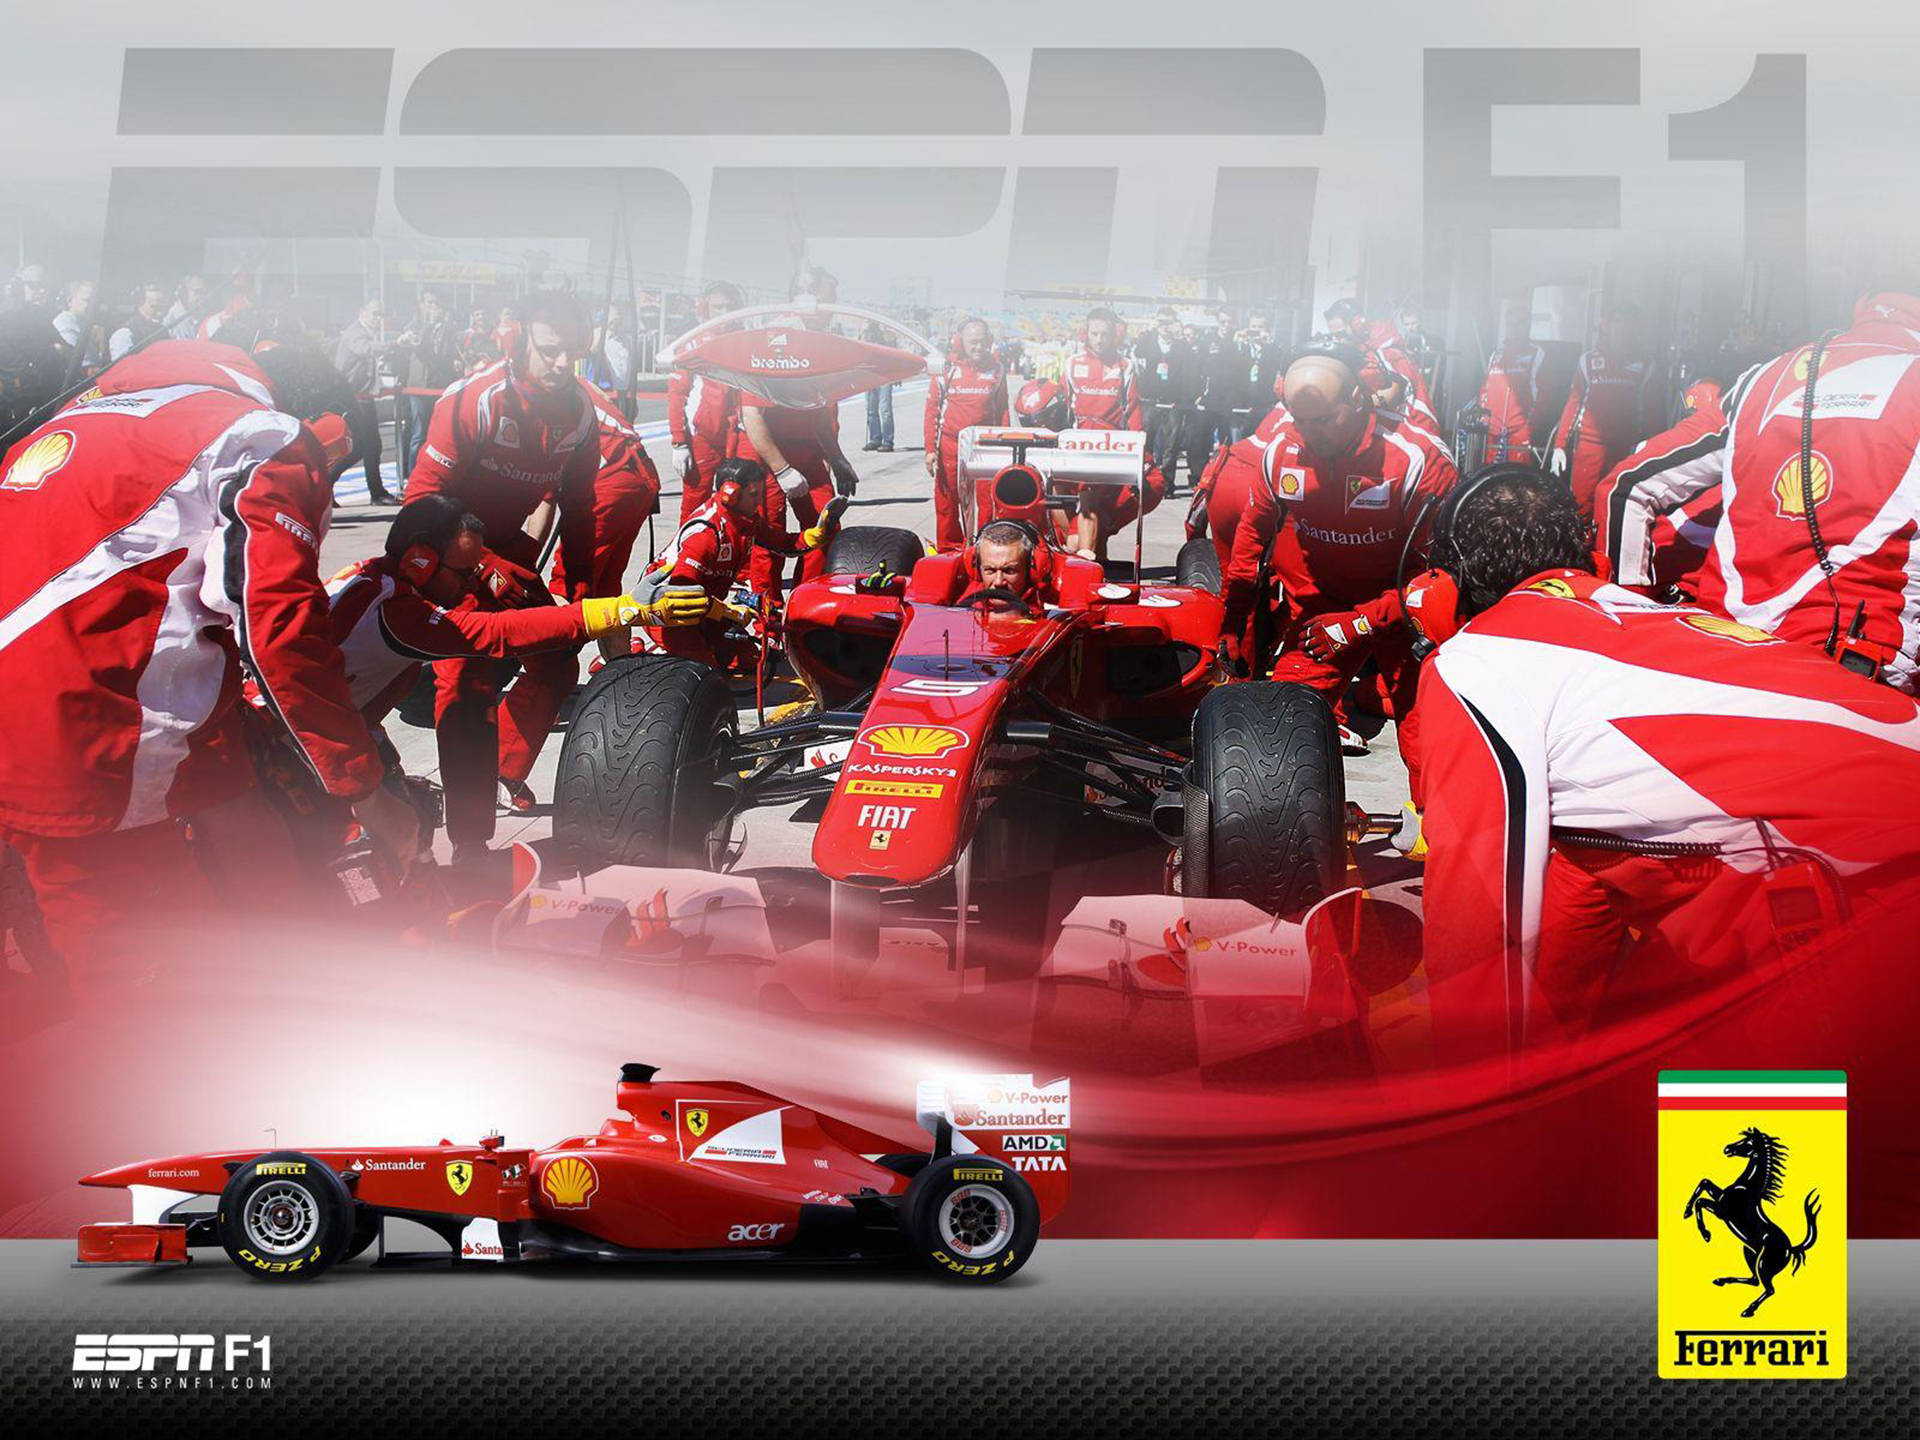 Espn F1 Ferrari Team Background